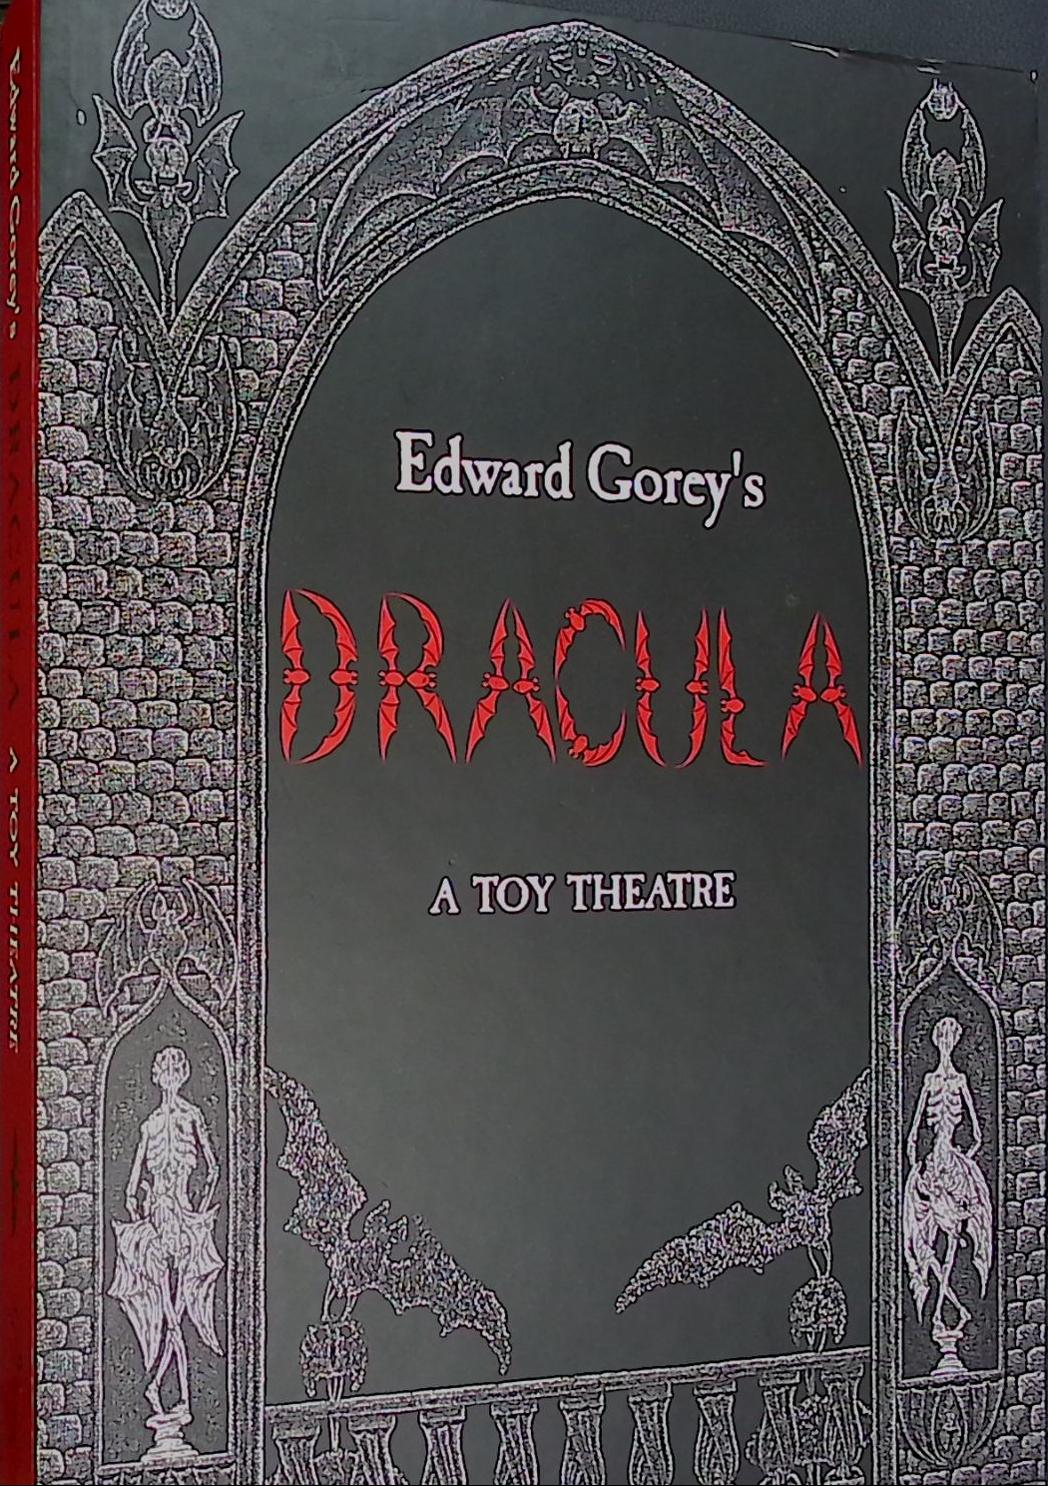 Edward Gorey's Dracula. A Toy Theatre.